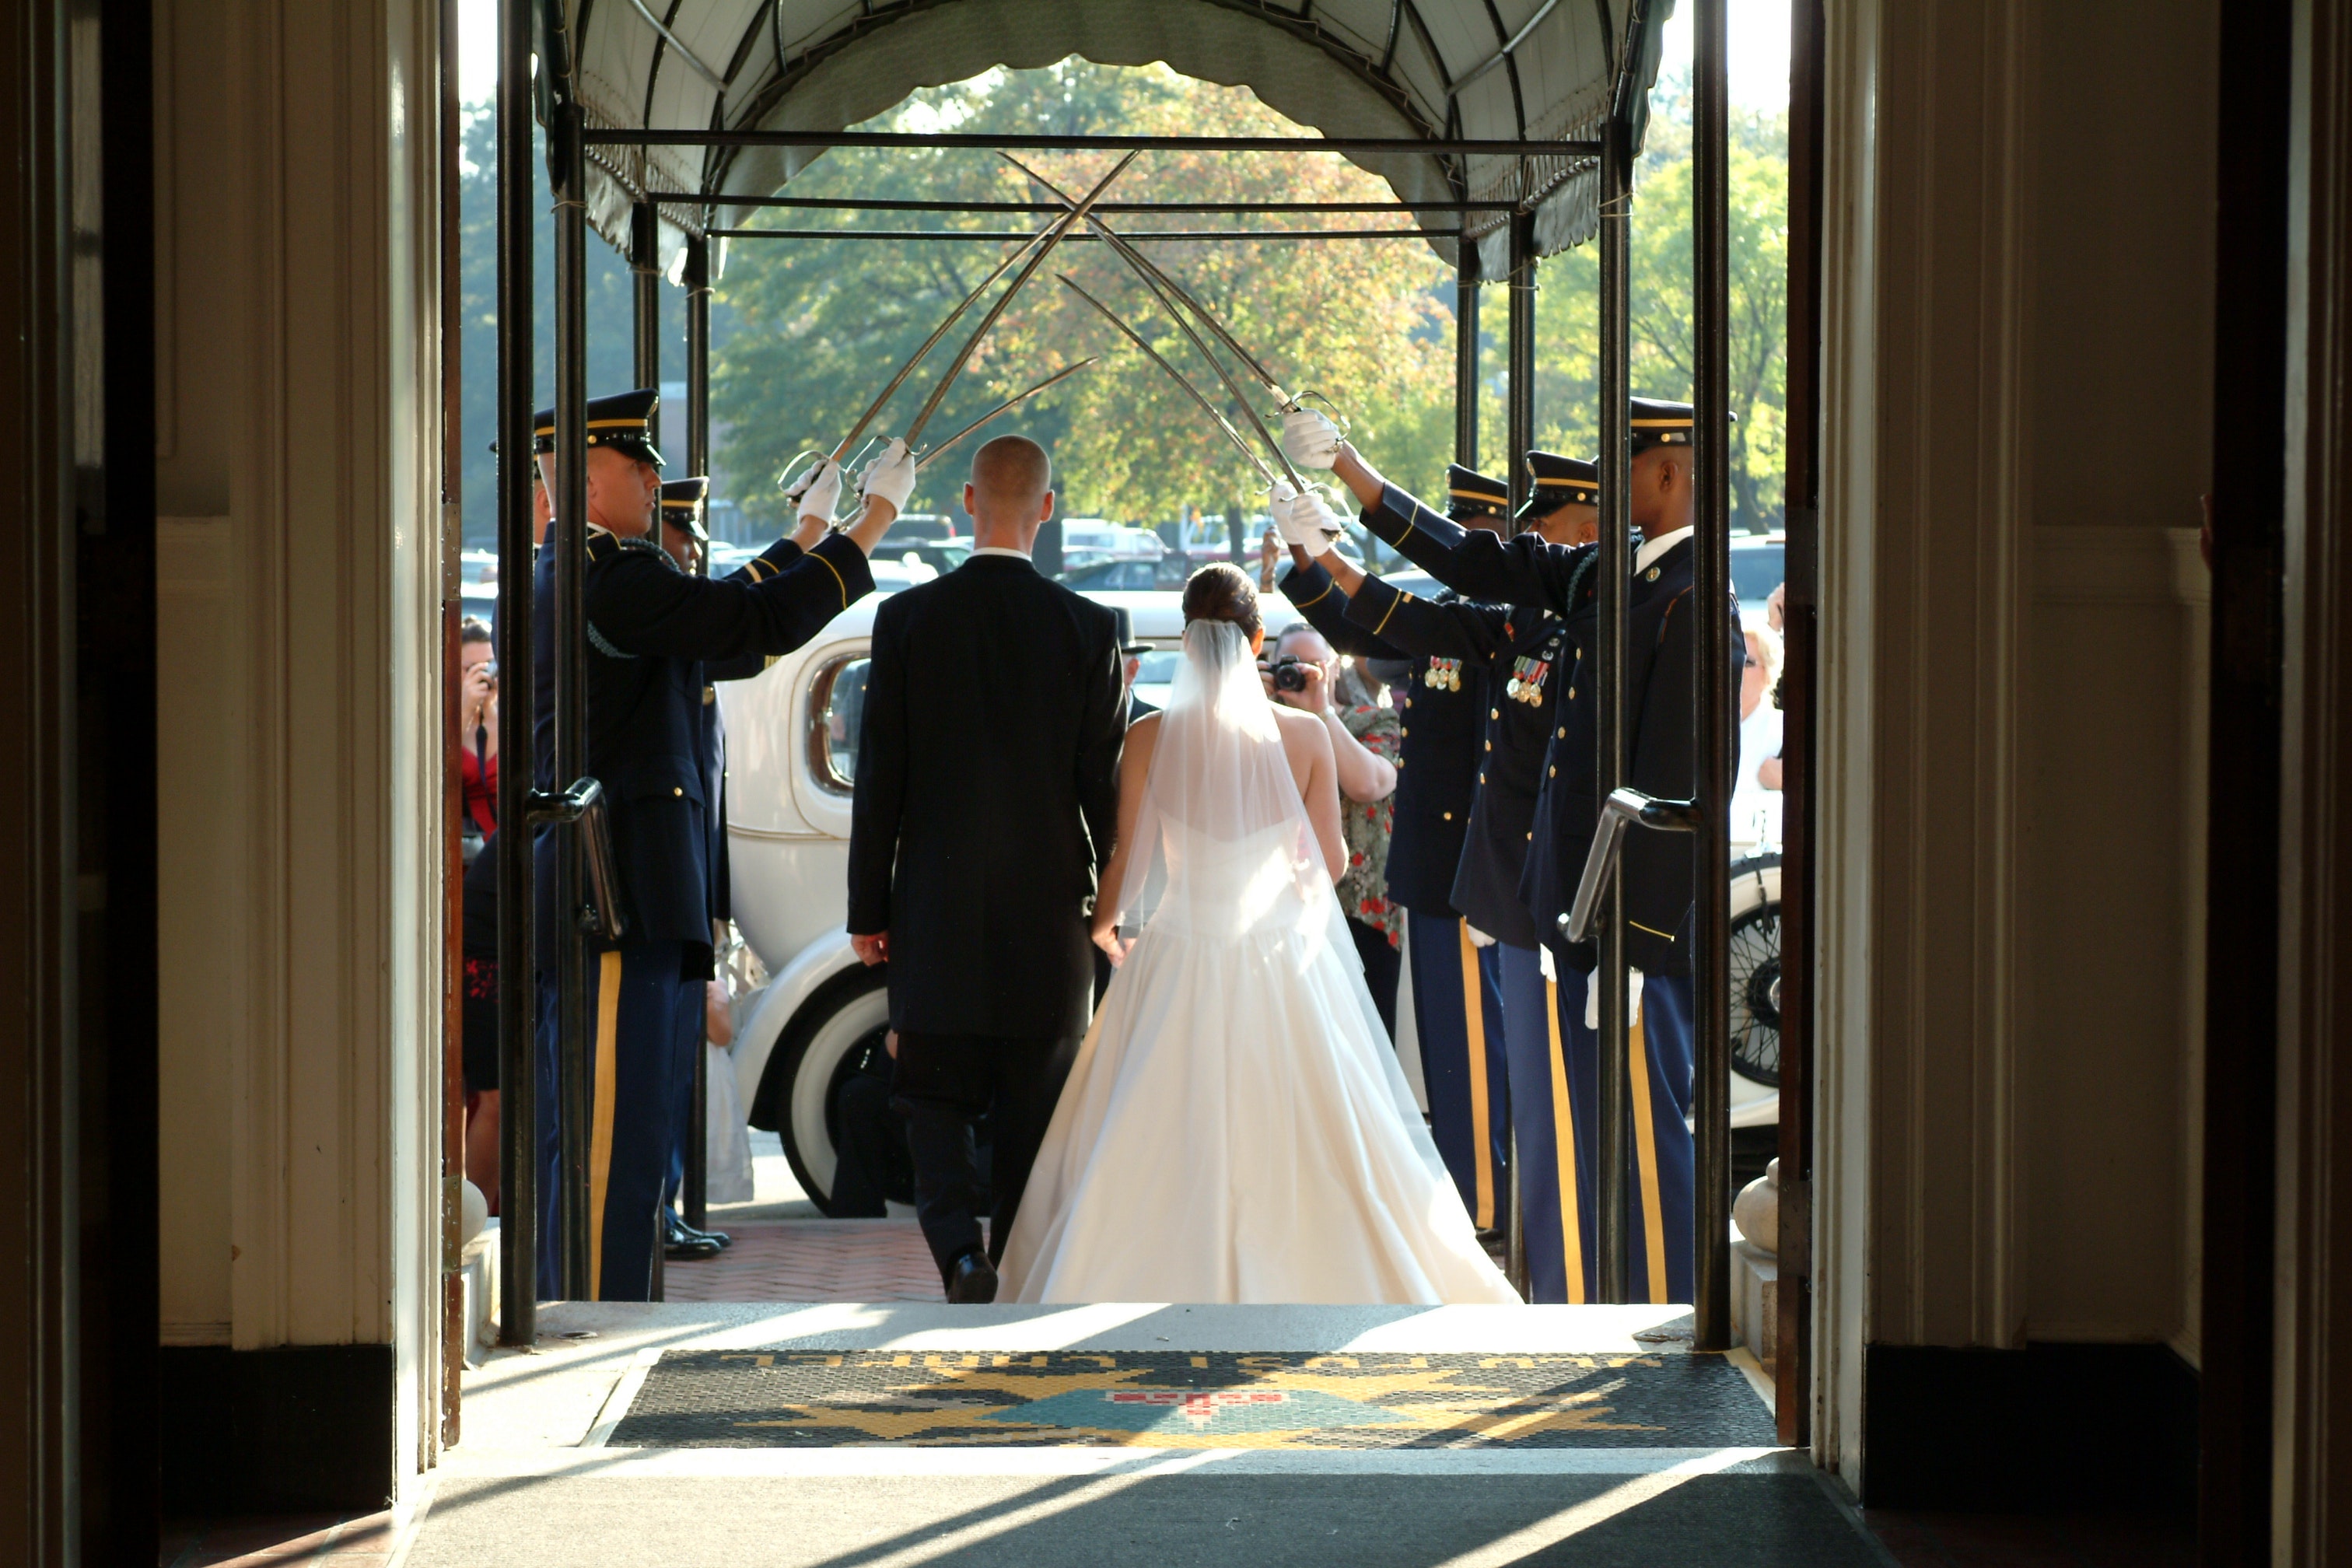 Wedding couple marching exit towards car at daytime photo